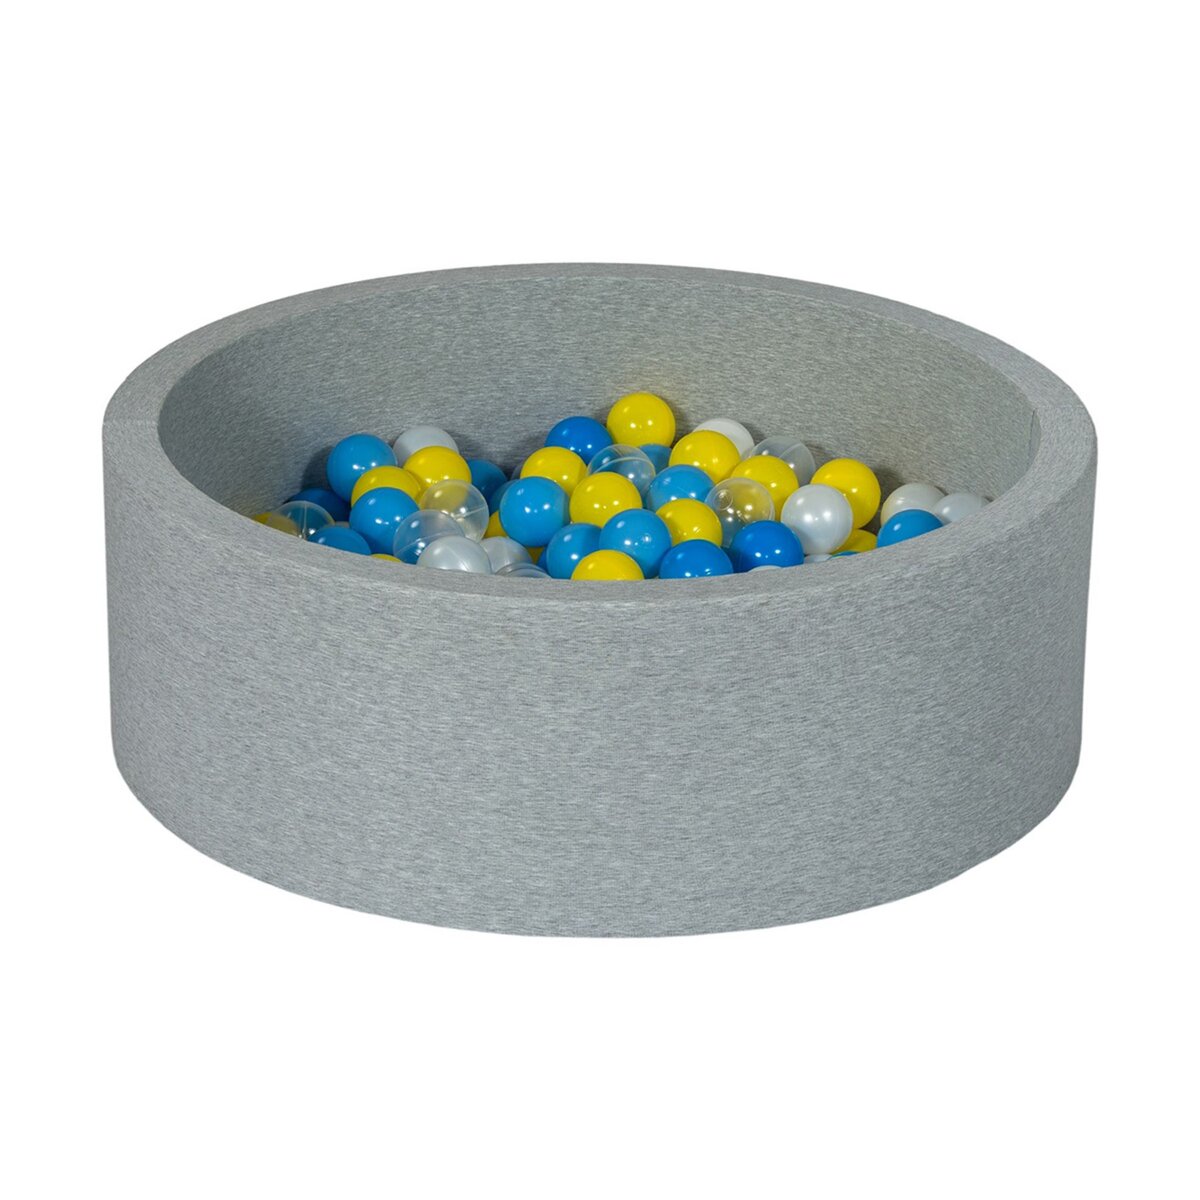  Piscine à balles Aire de jeu + 150 balles perle, transparent, jaune, bleu, bleu clair